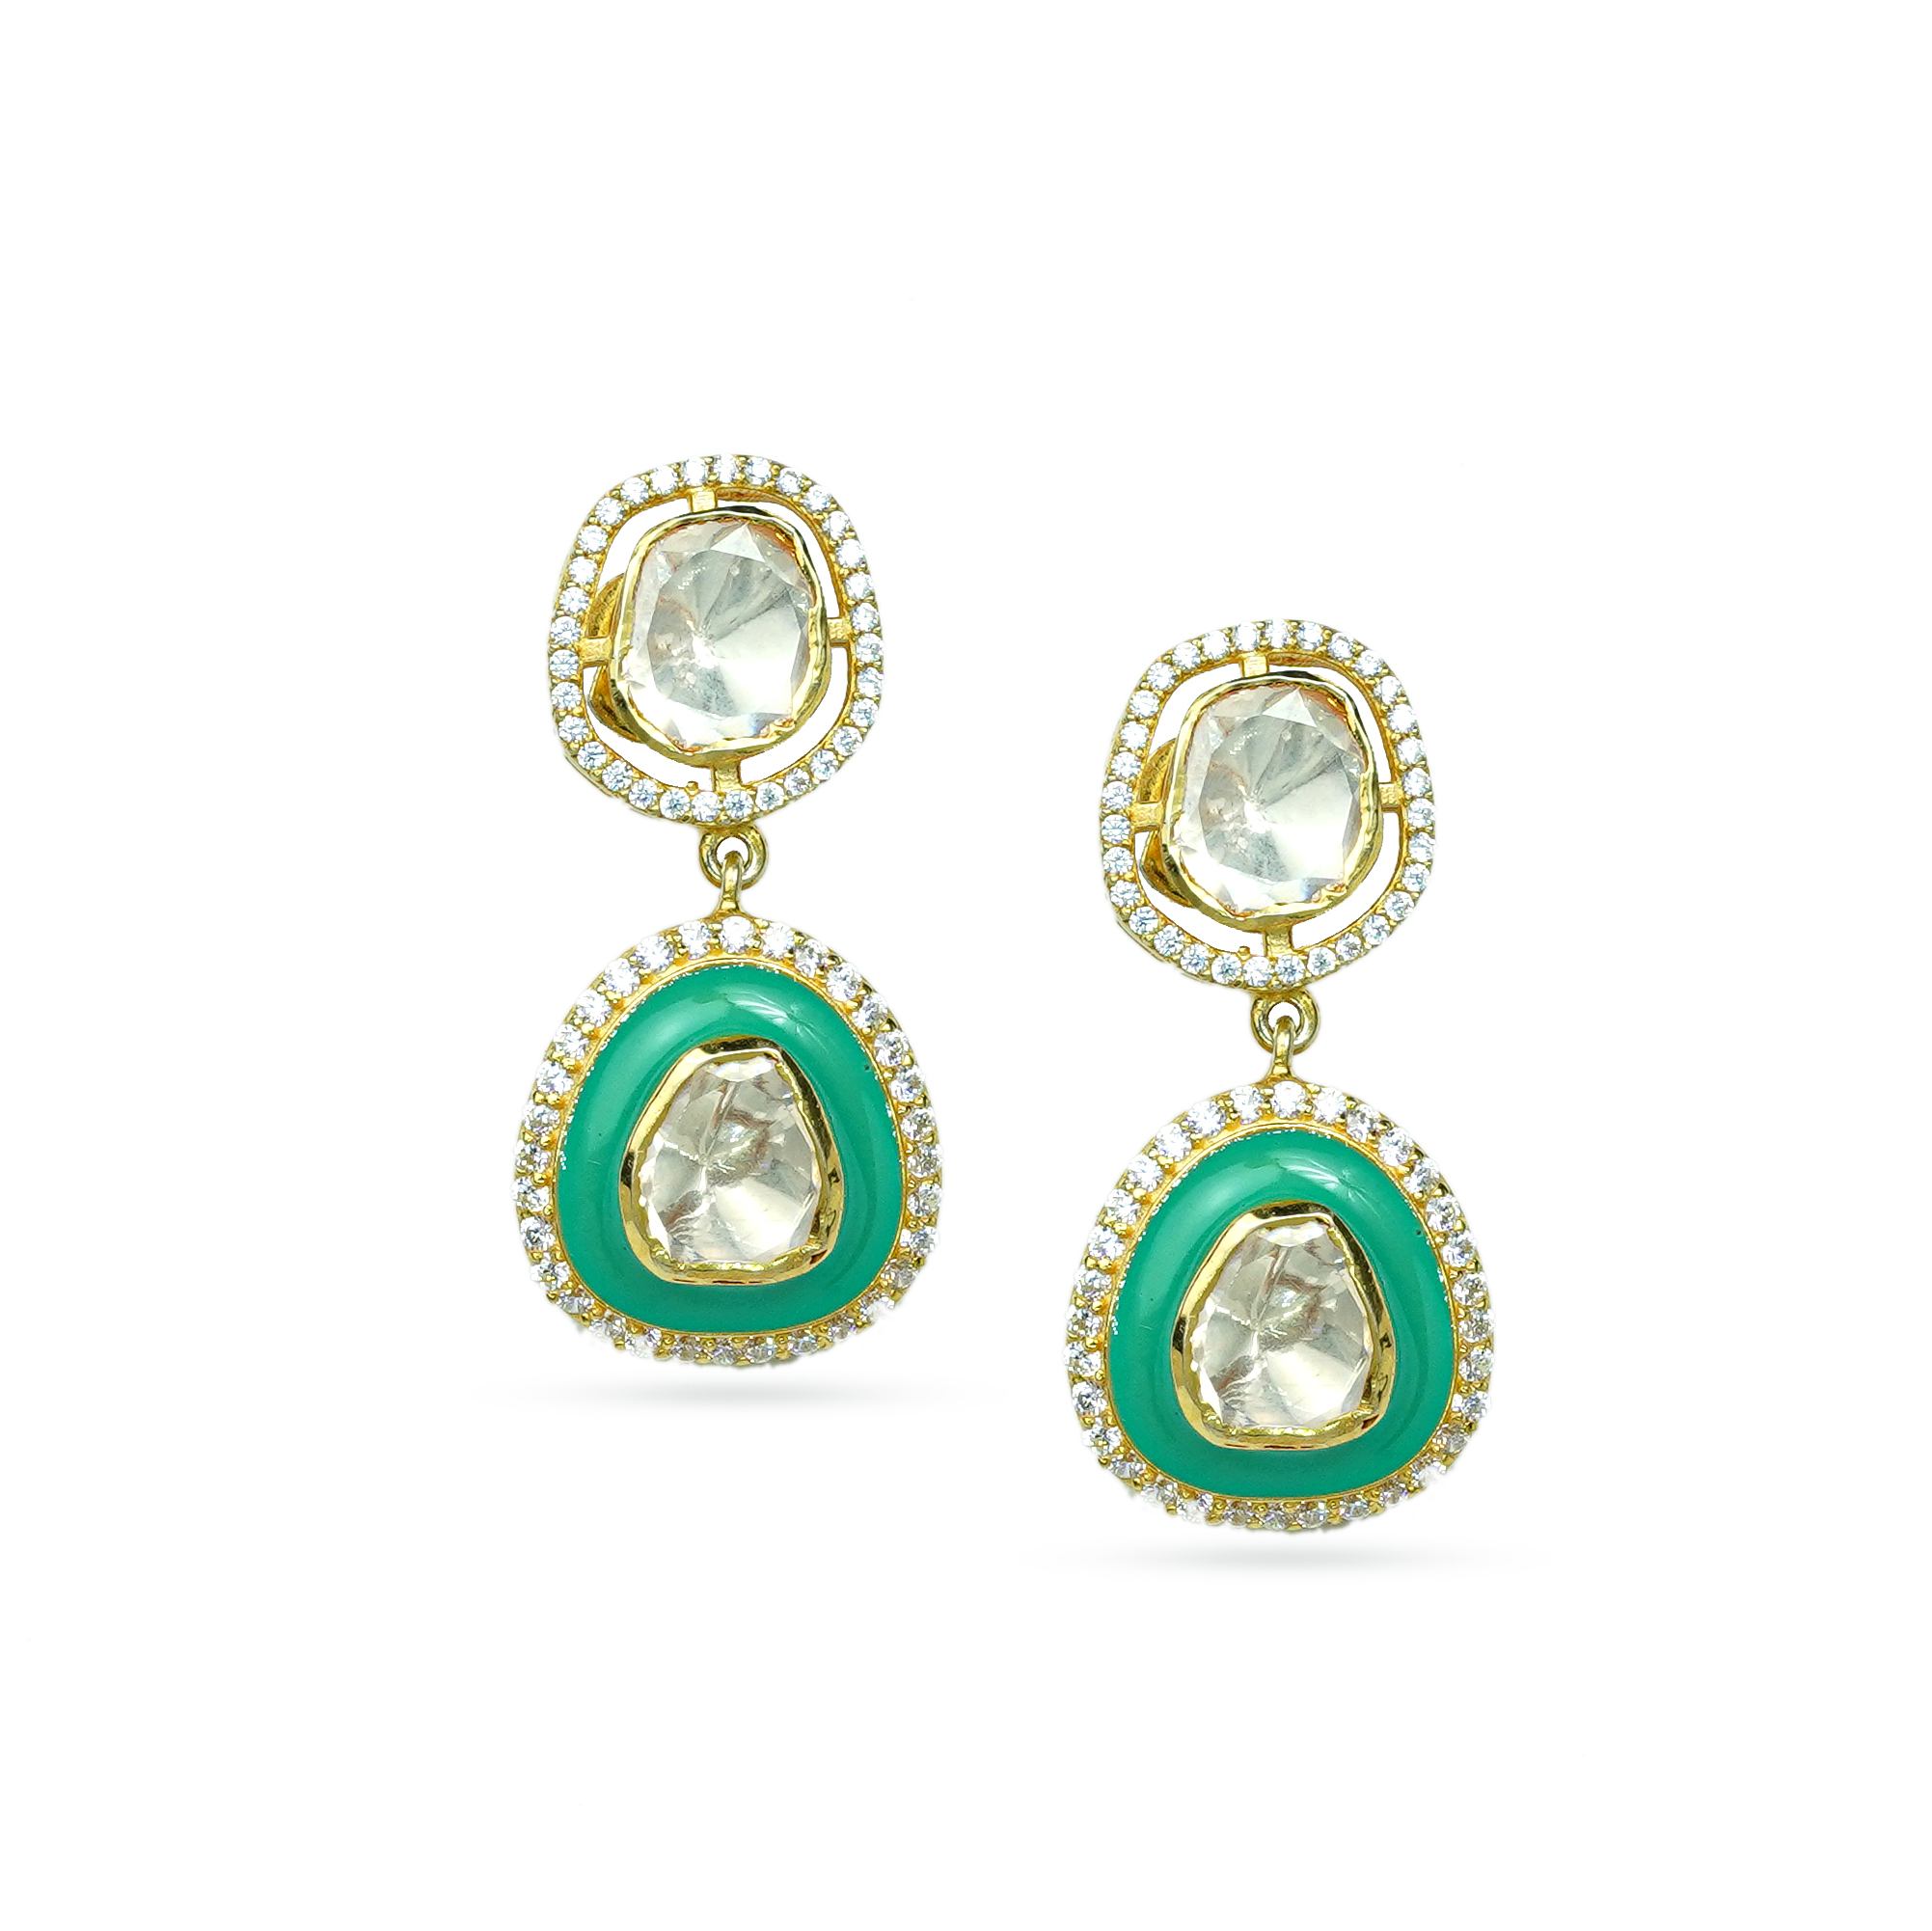 925 Silver Jewelry Moissanite Earring Polki Earing Wedding Jewelry